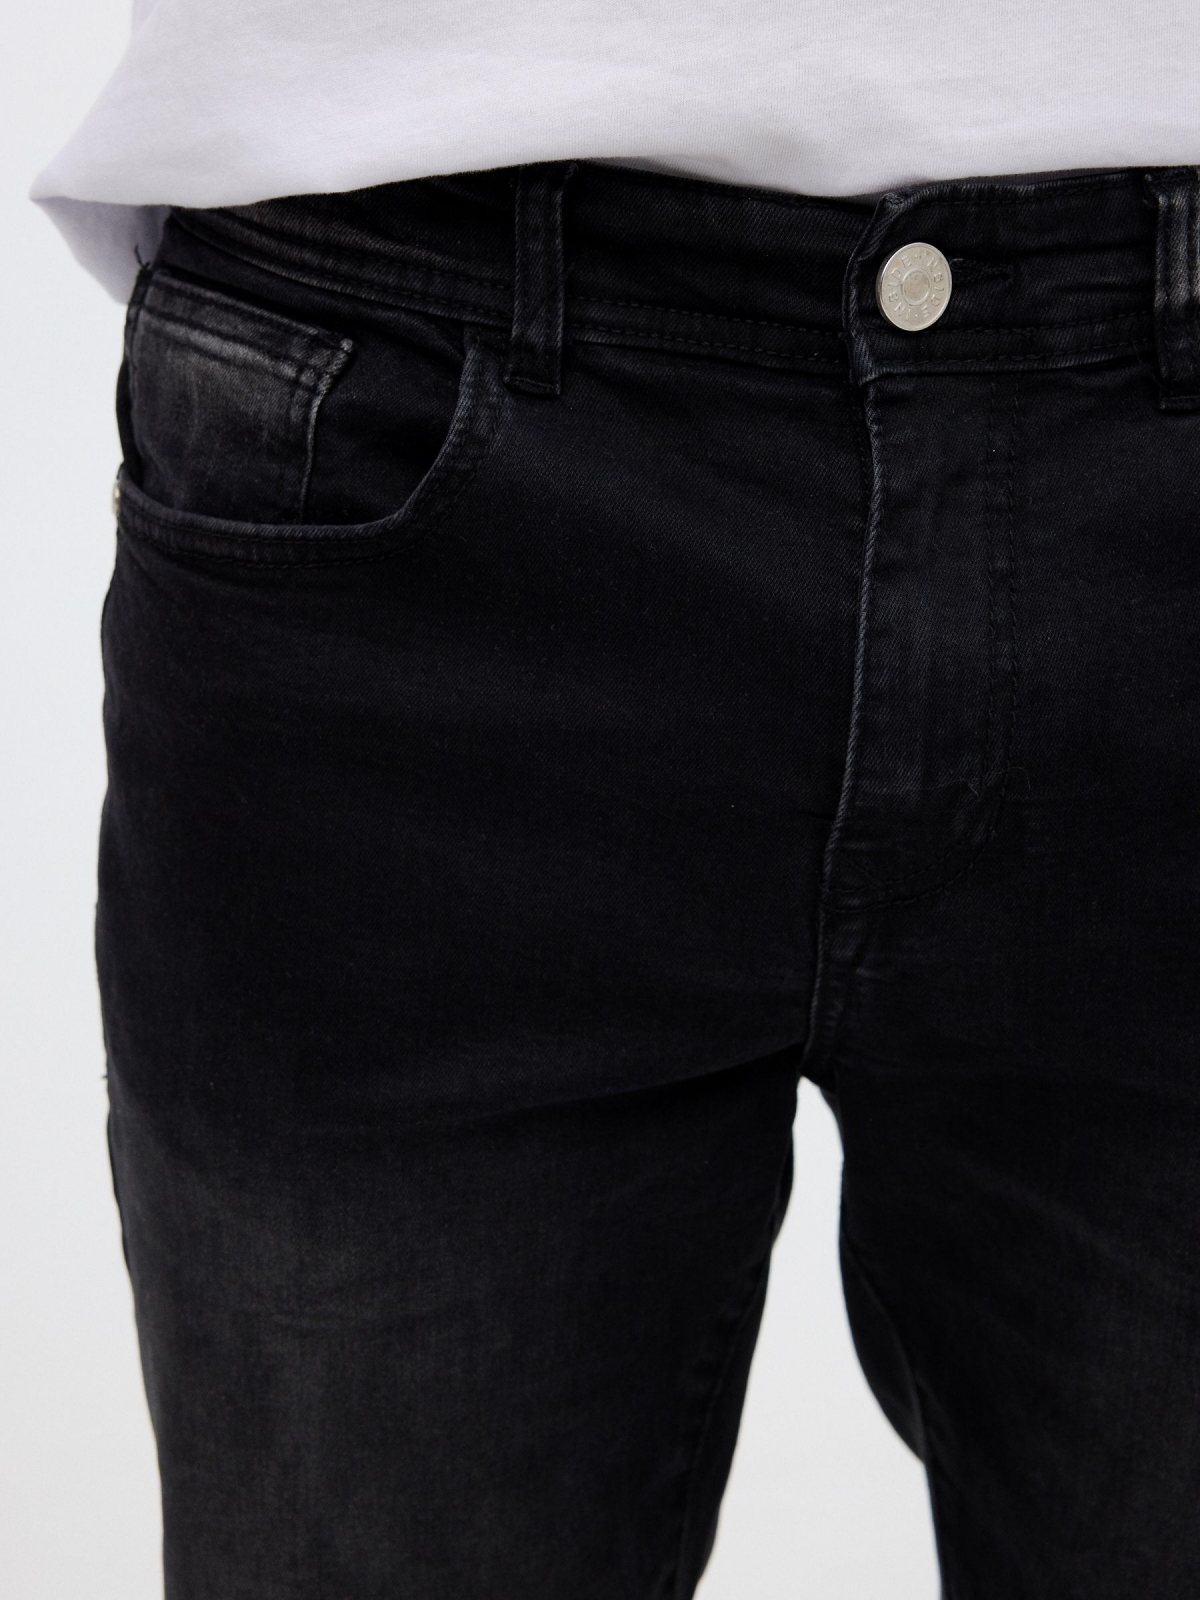 Denim jogger trousers black detail view